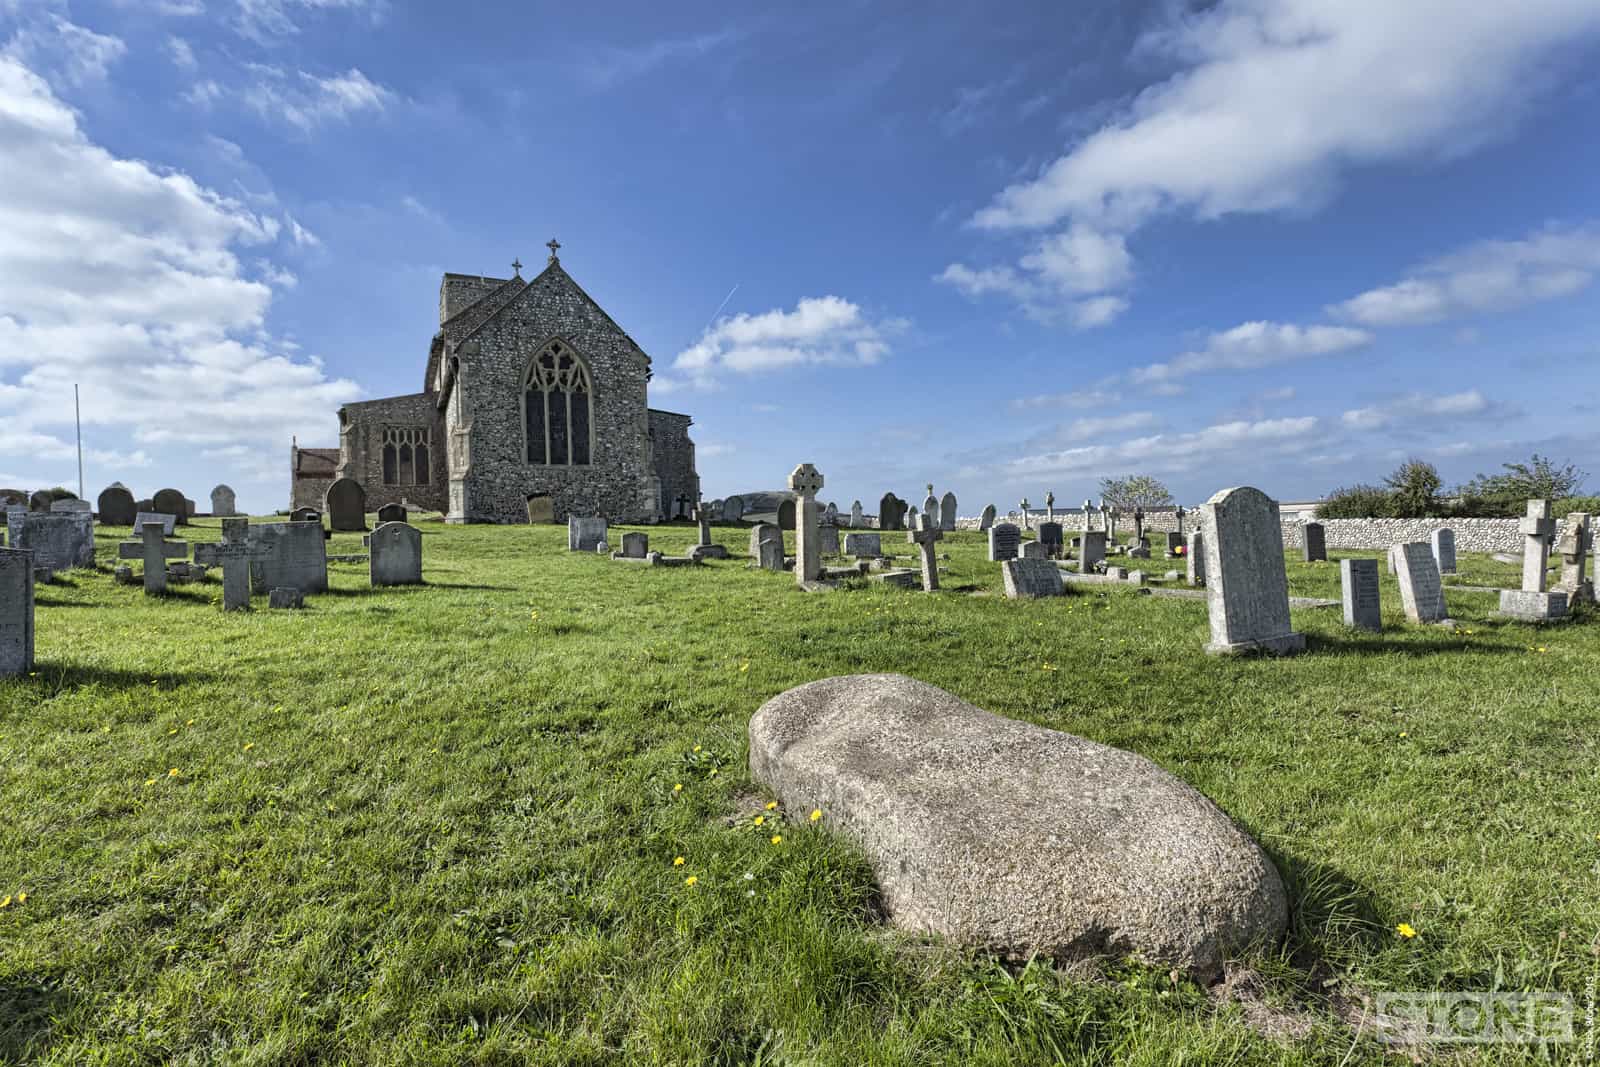 Coasting: Beeston Regis – Farmer Reynolds peculiar grave